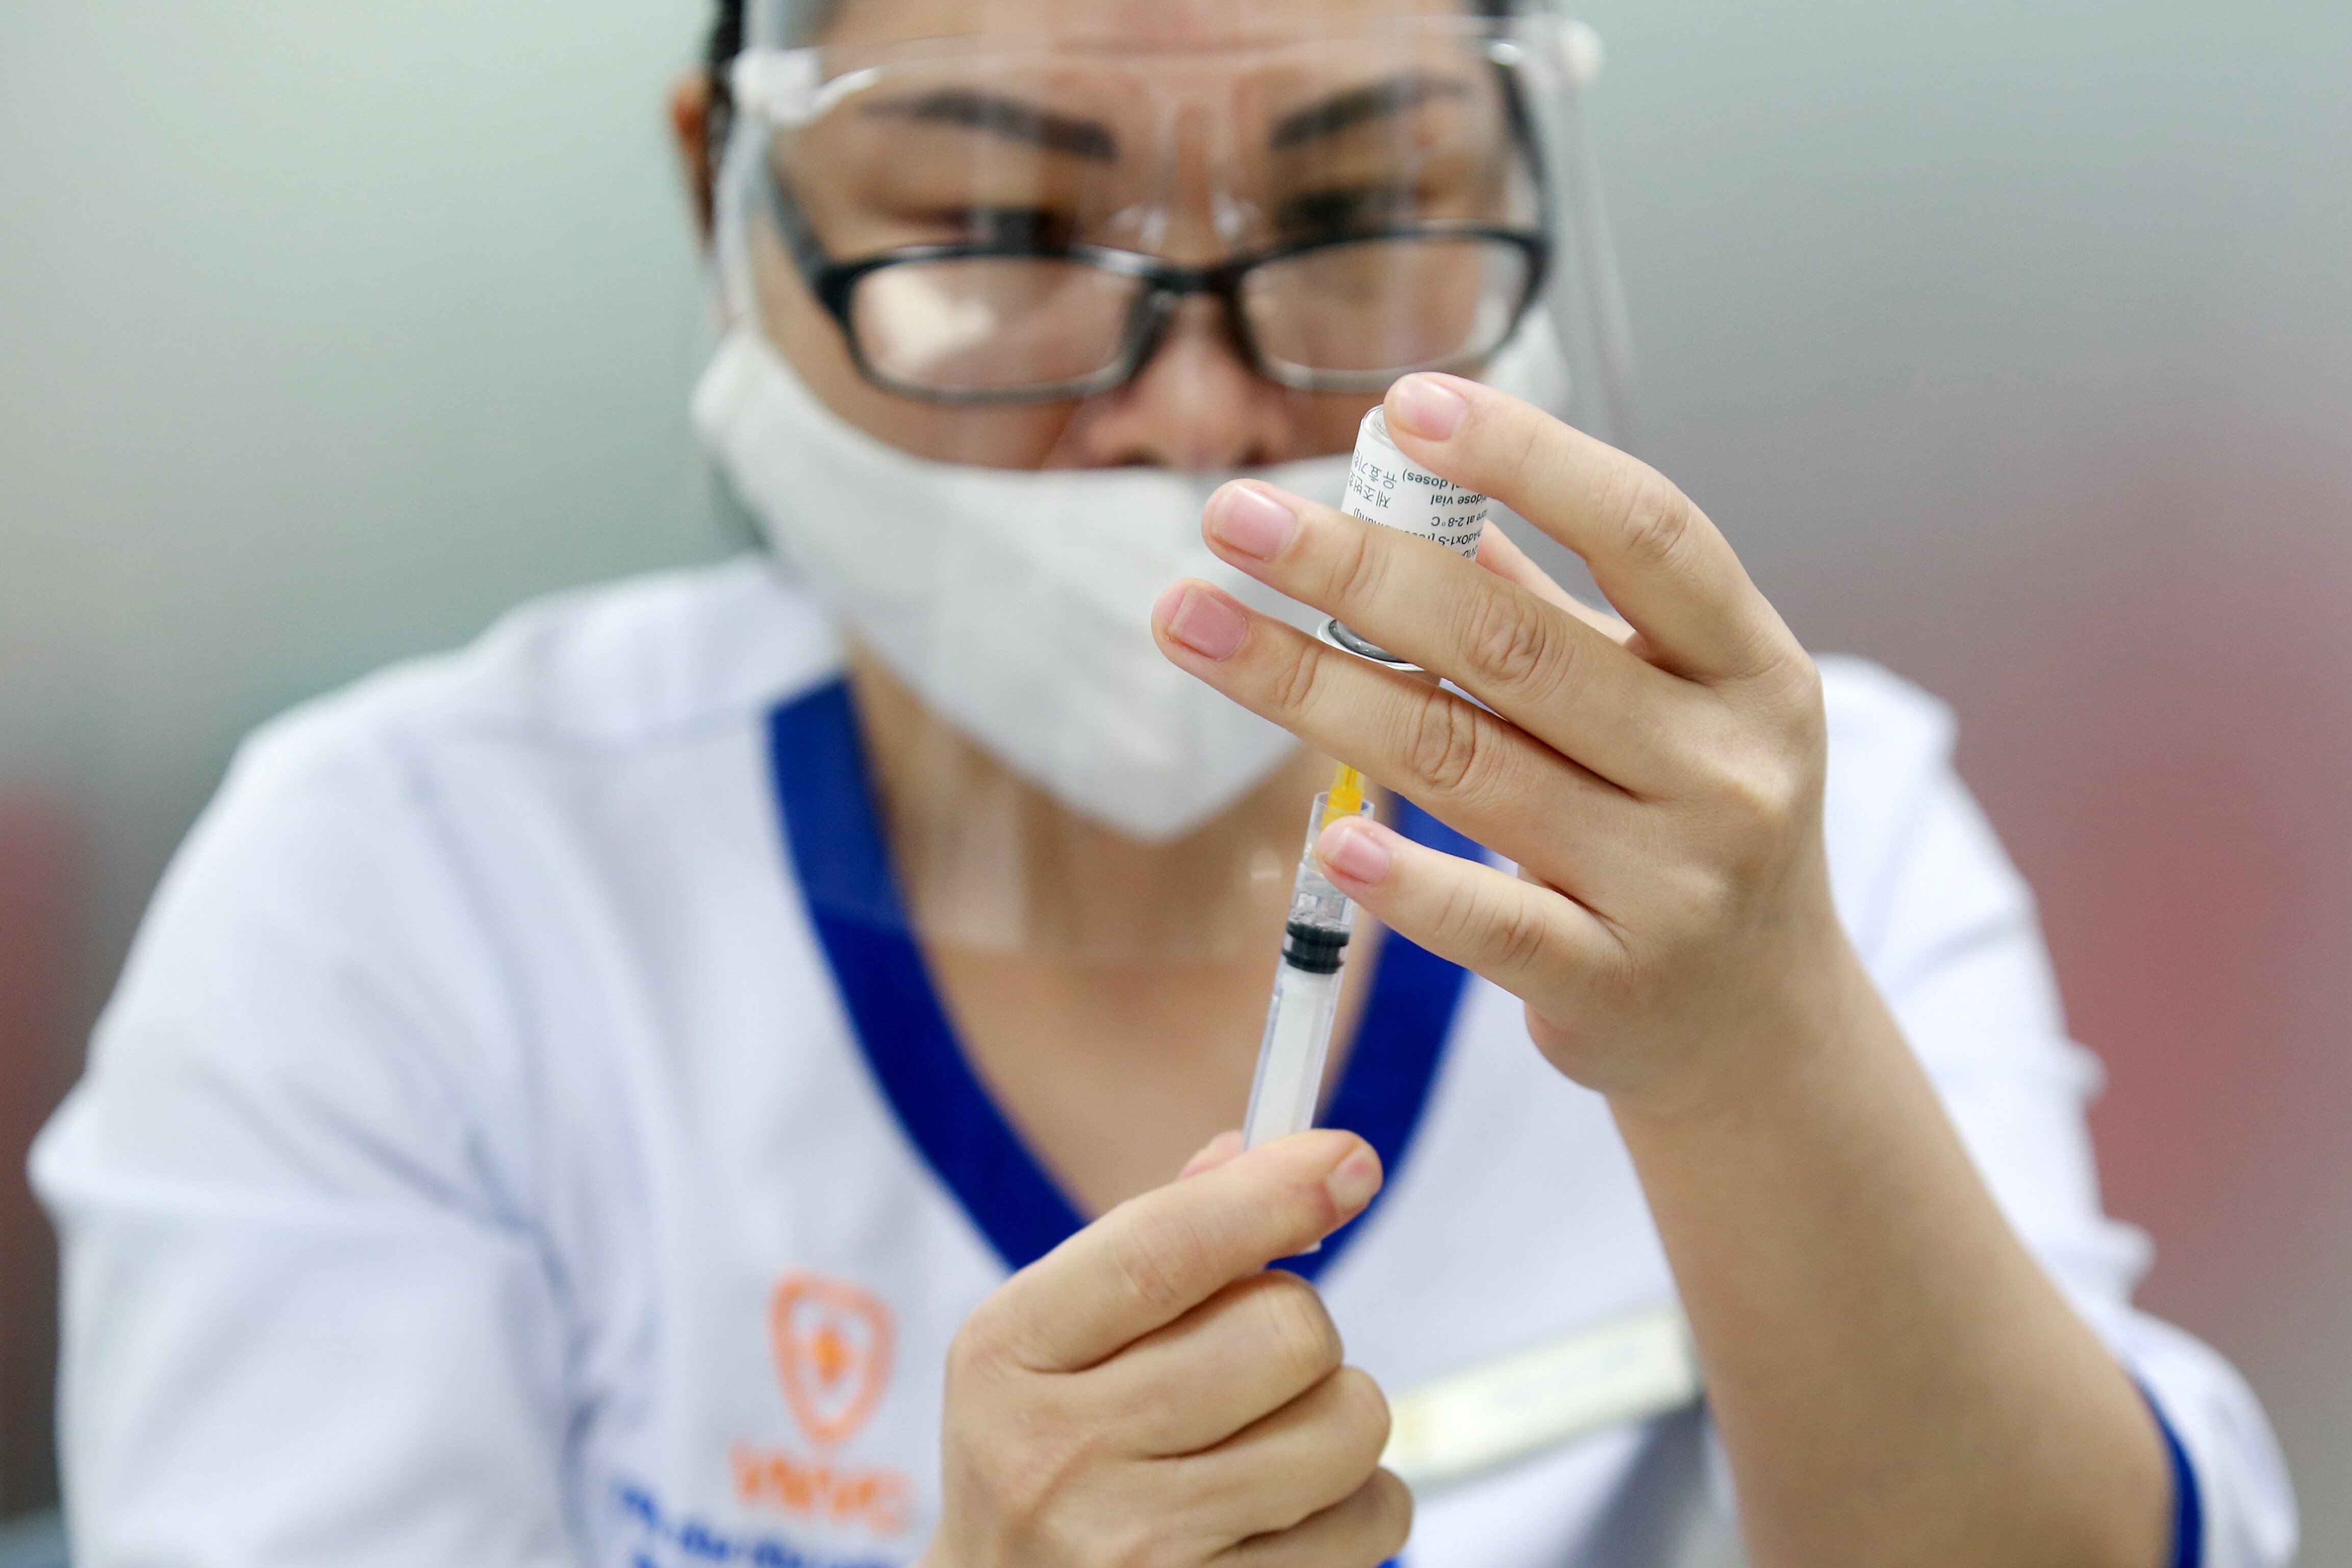 A health worker prepares a shot of the AstraZeneca Covid-19 vaccine in Hanoi, Vietnam. Photo: EPA-EFE